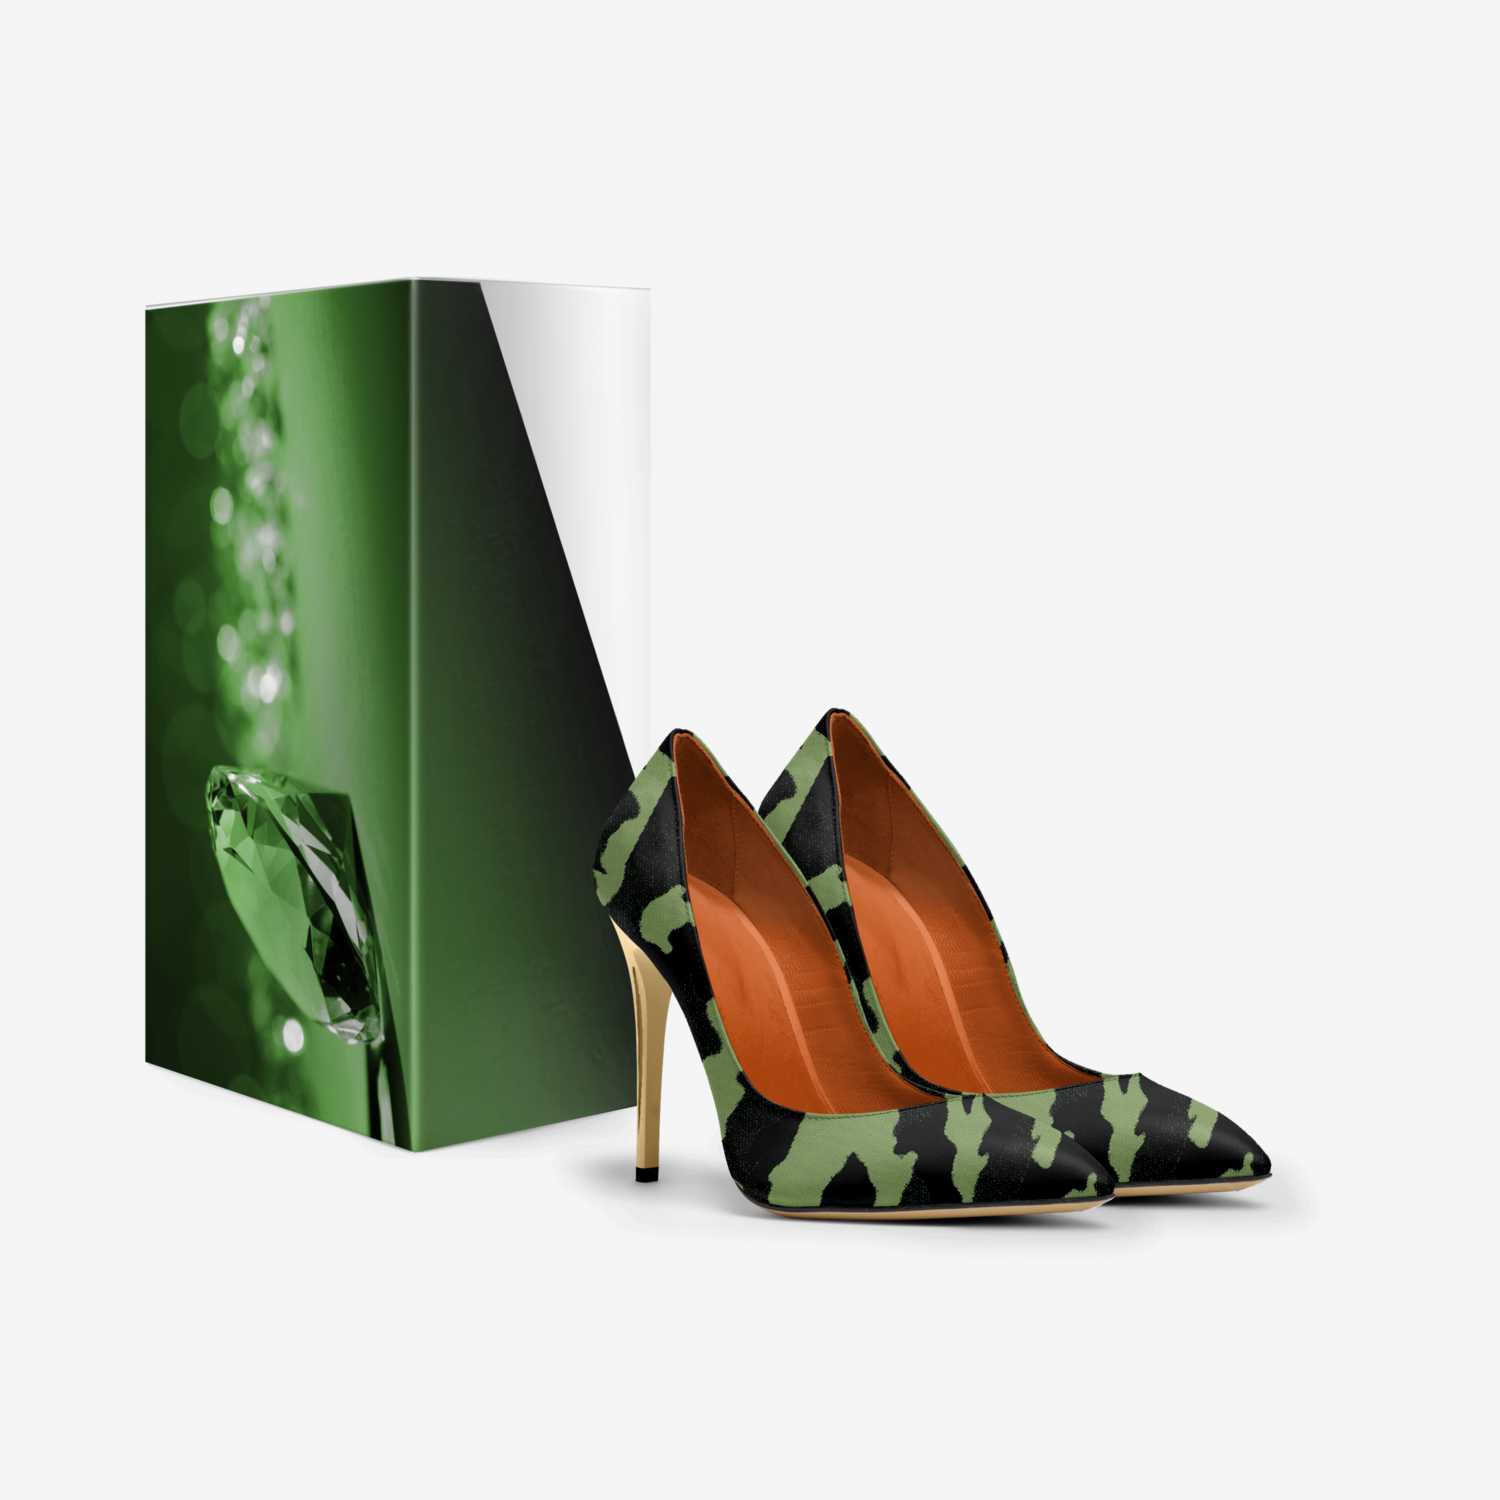 Warfare custom made in Italy shoes by Tina Beatty | Box view